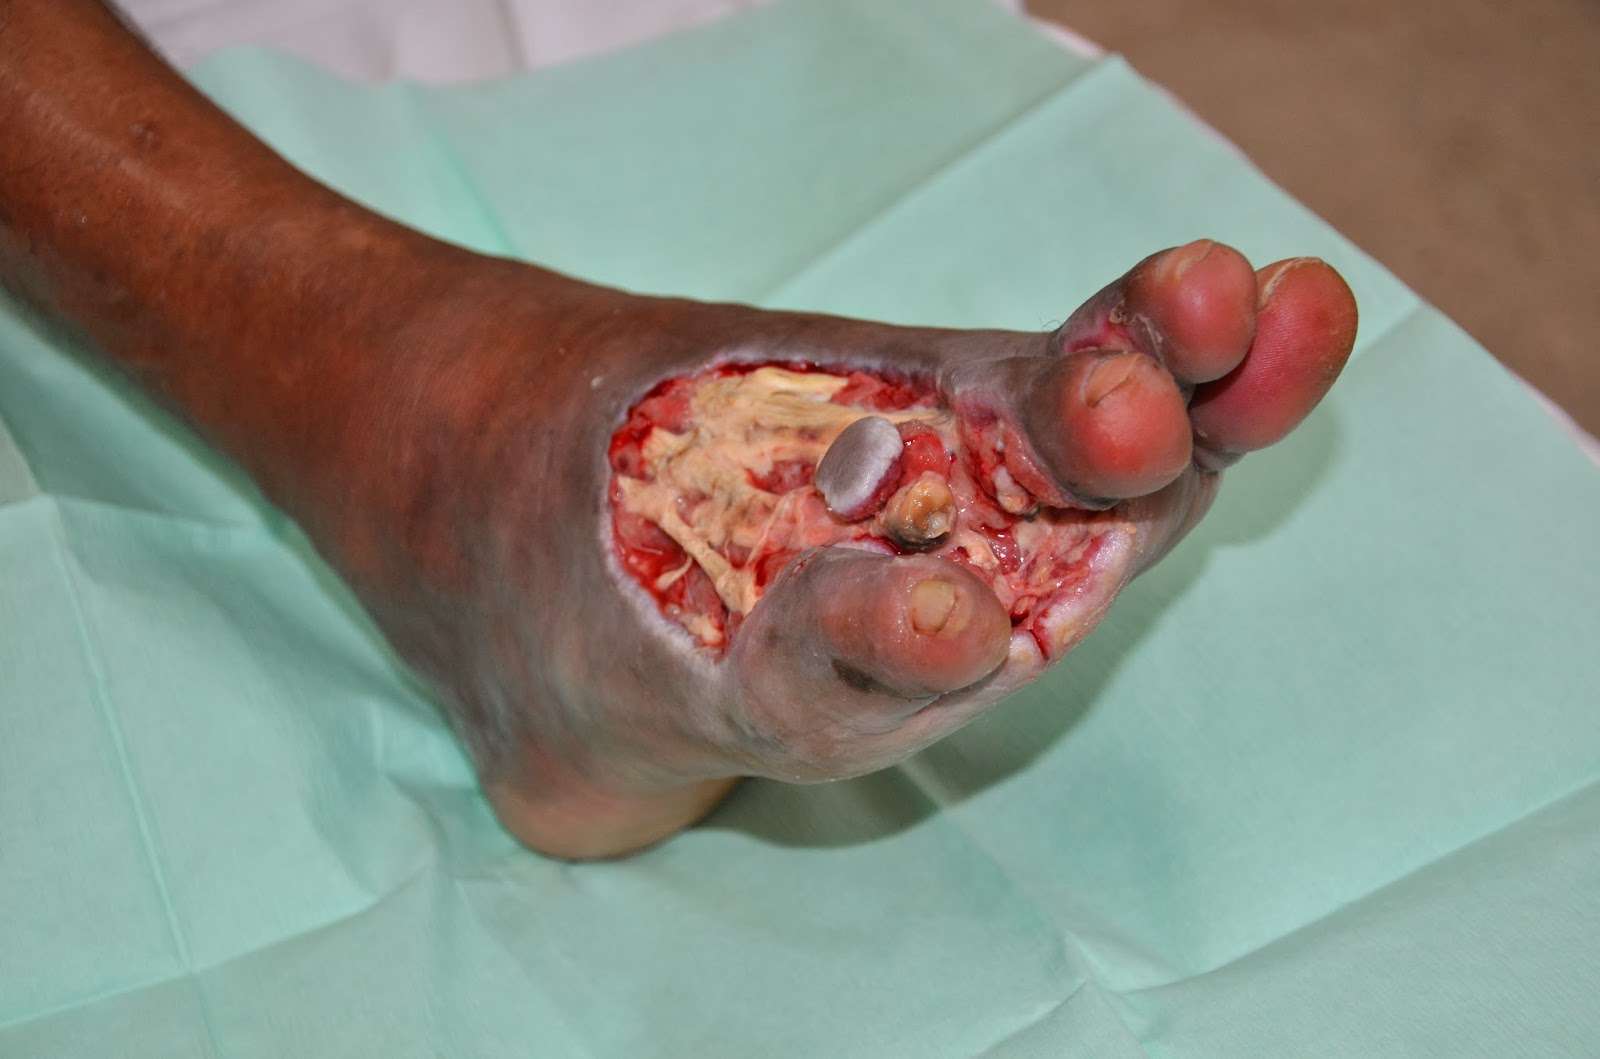 Diabetes Terengganu: Diabetic Foot Ulcer